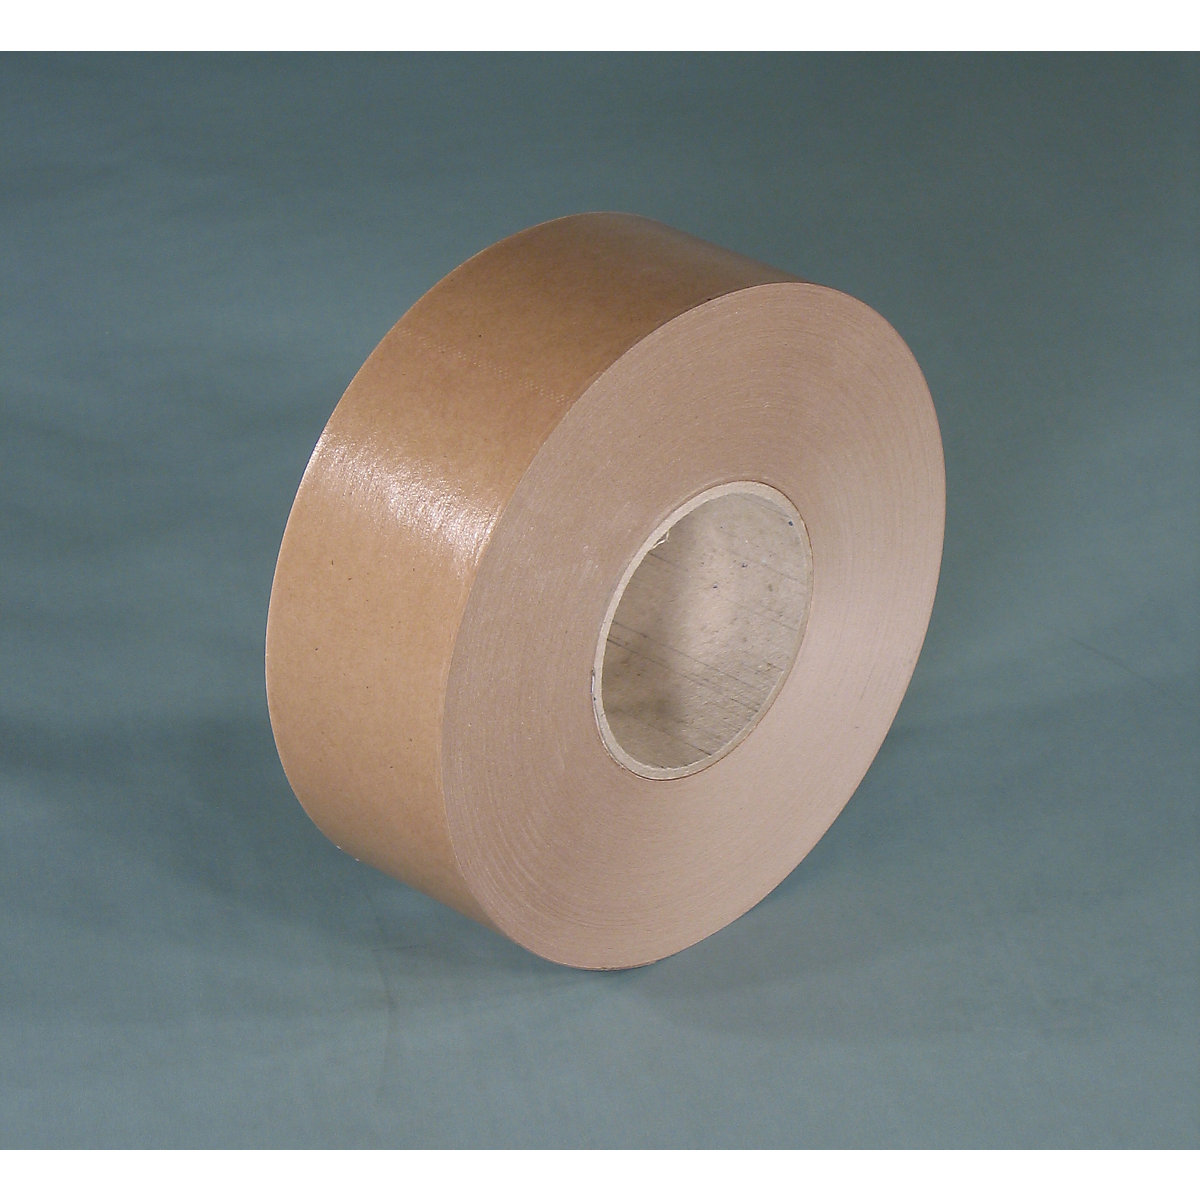 Cinta adhesiva en húmedo – eurokraft basic, modelo sencillo, UE 12 rollos, marrón, anchura de cinta 60 mm-4